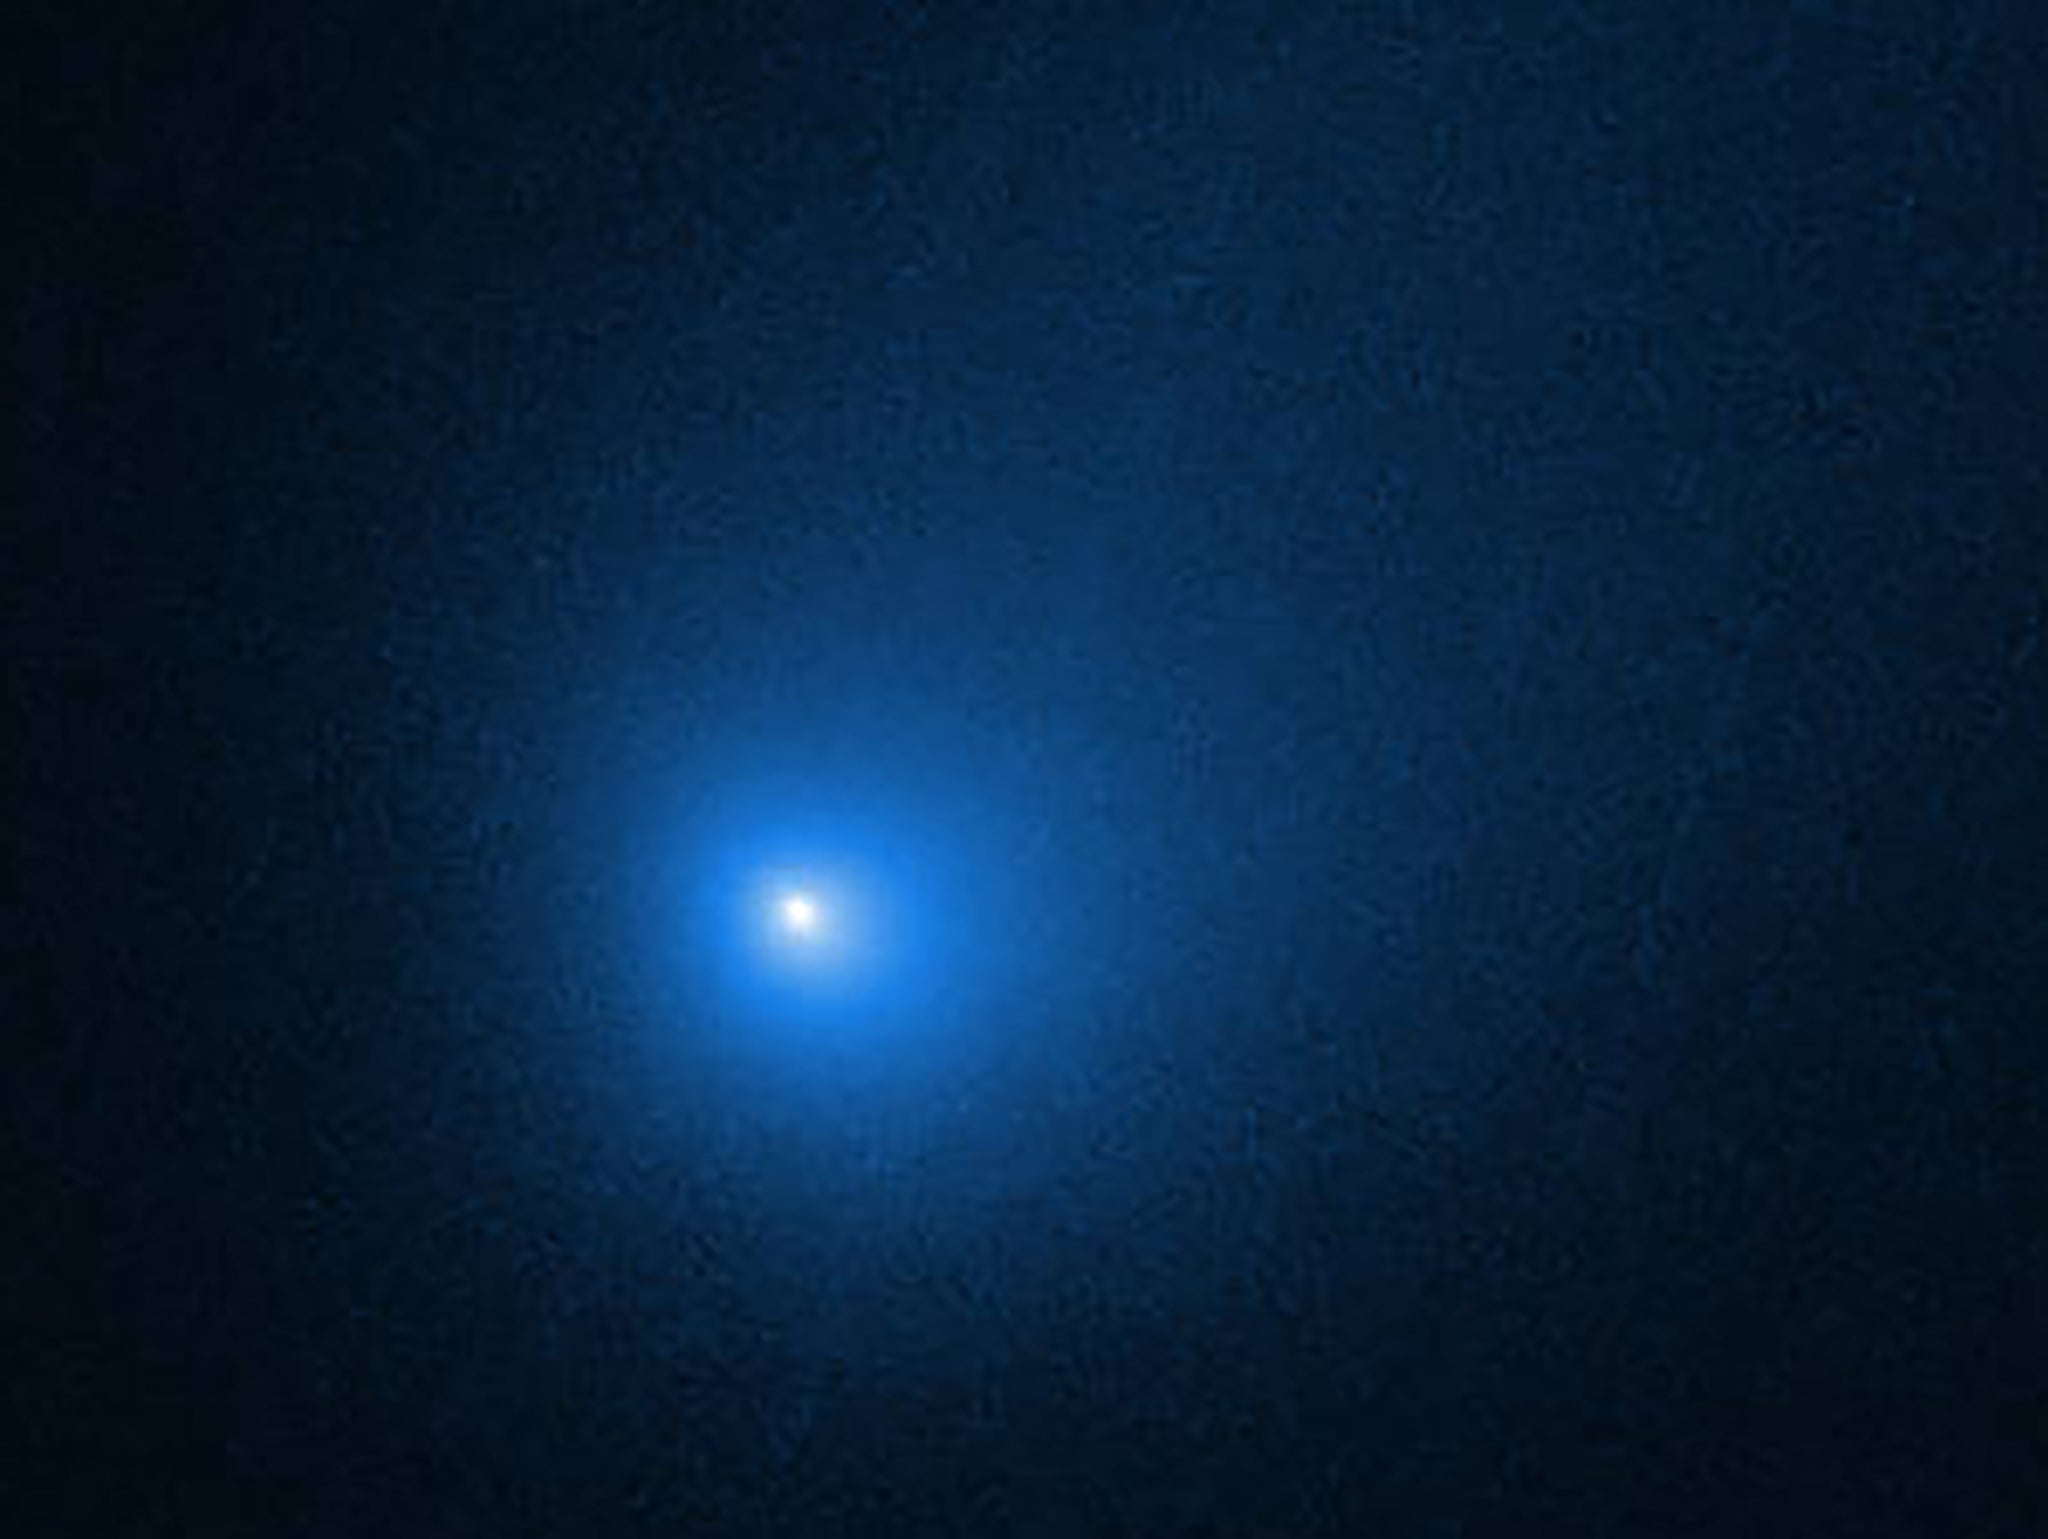 Scientist are studying the ‘gooey centre’ of Comet 2I/Borisov